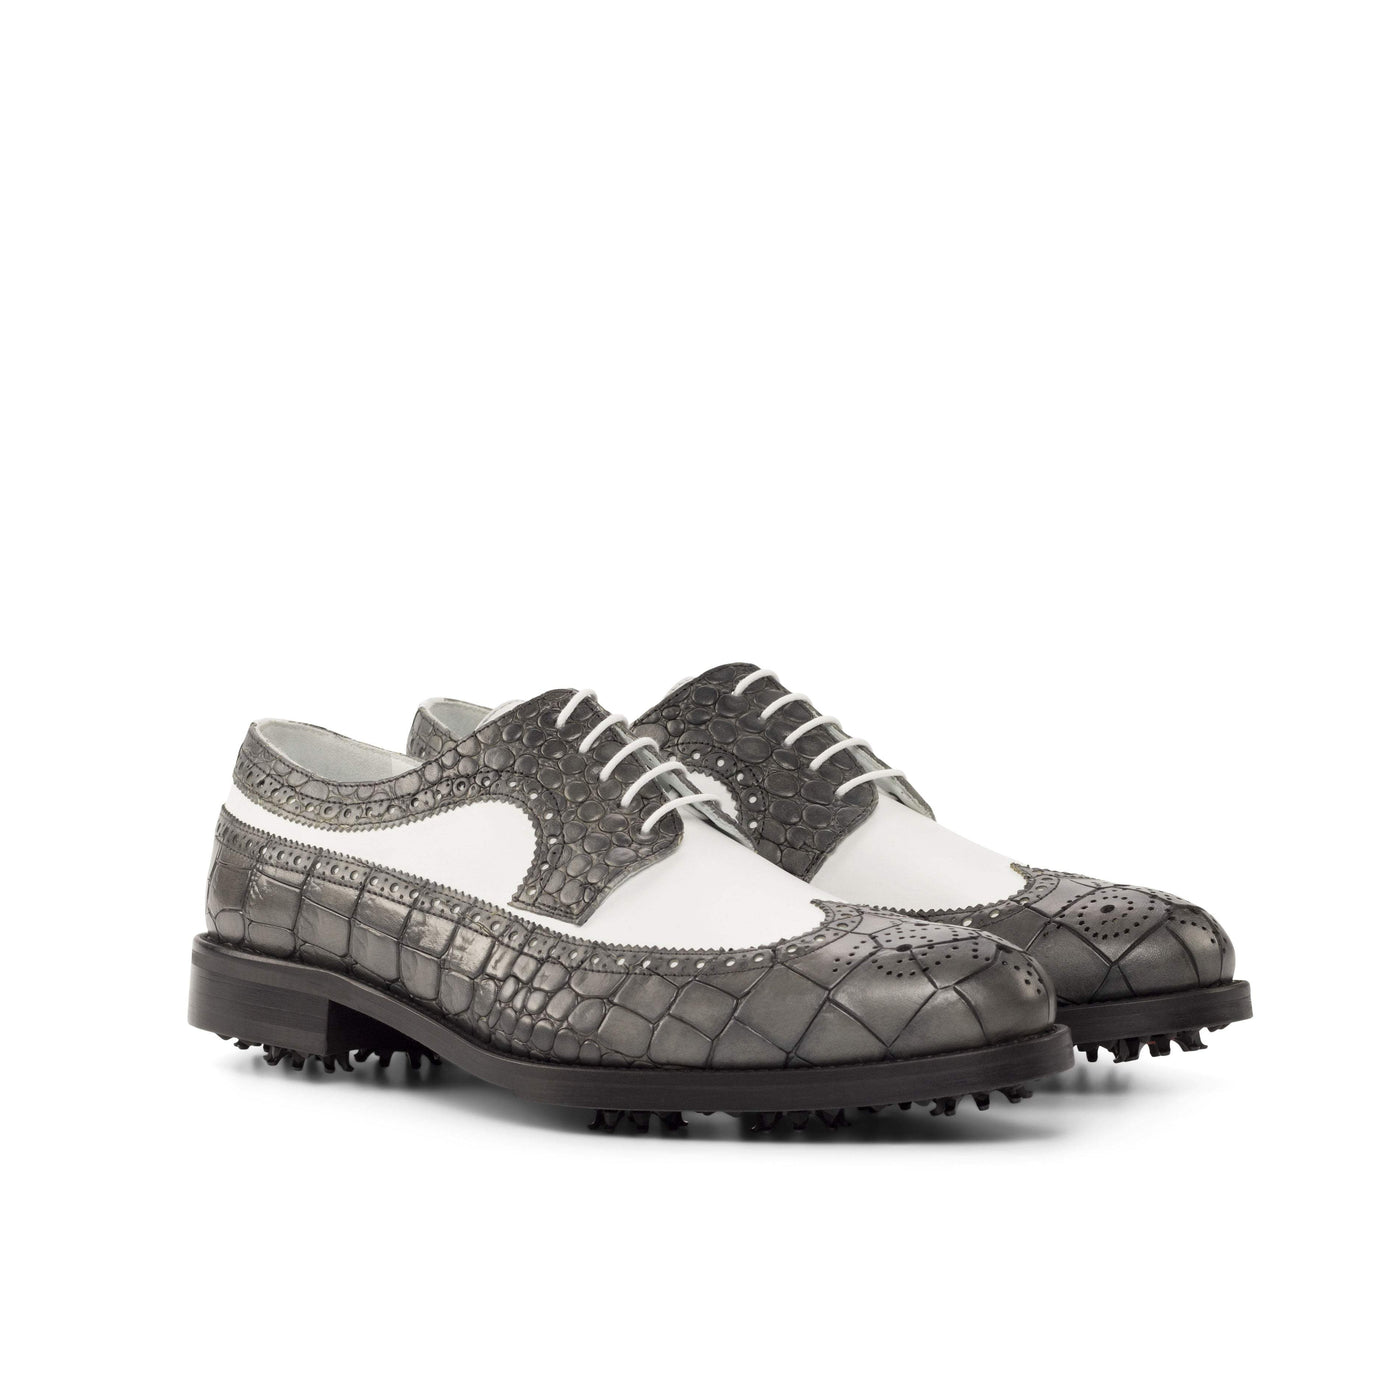 Men's Longwing Blucher Golf Shoes Leather White Grey 4751 3- MERRIMIUM